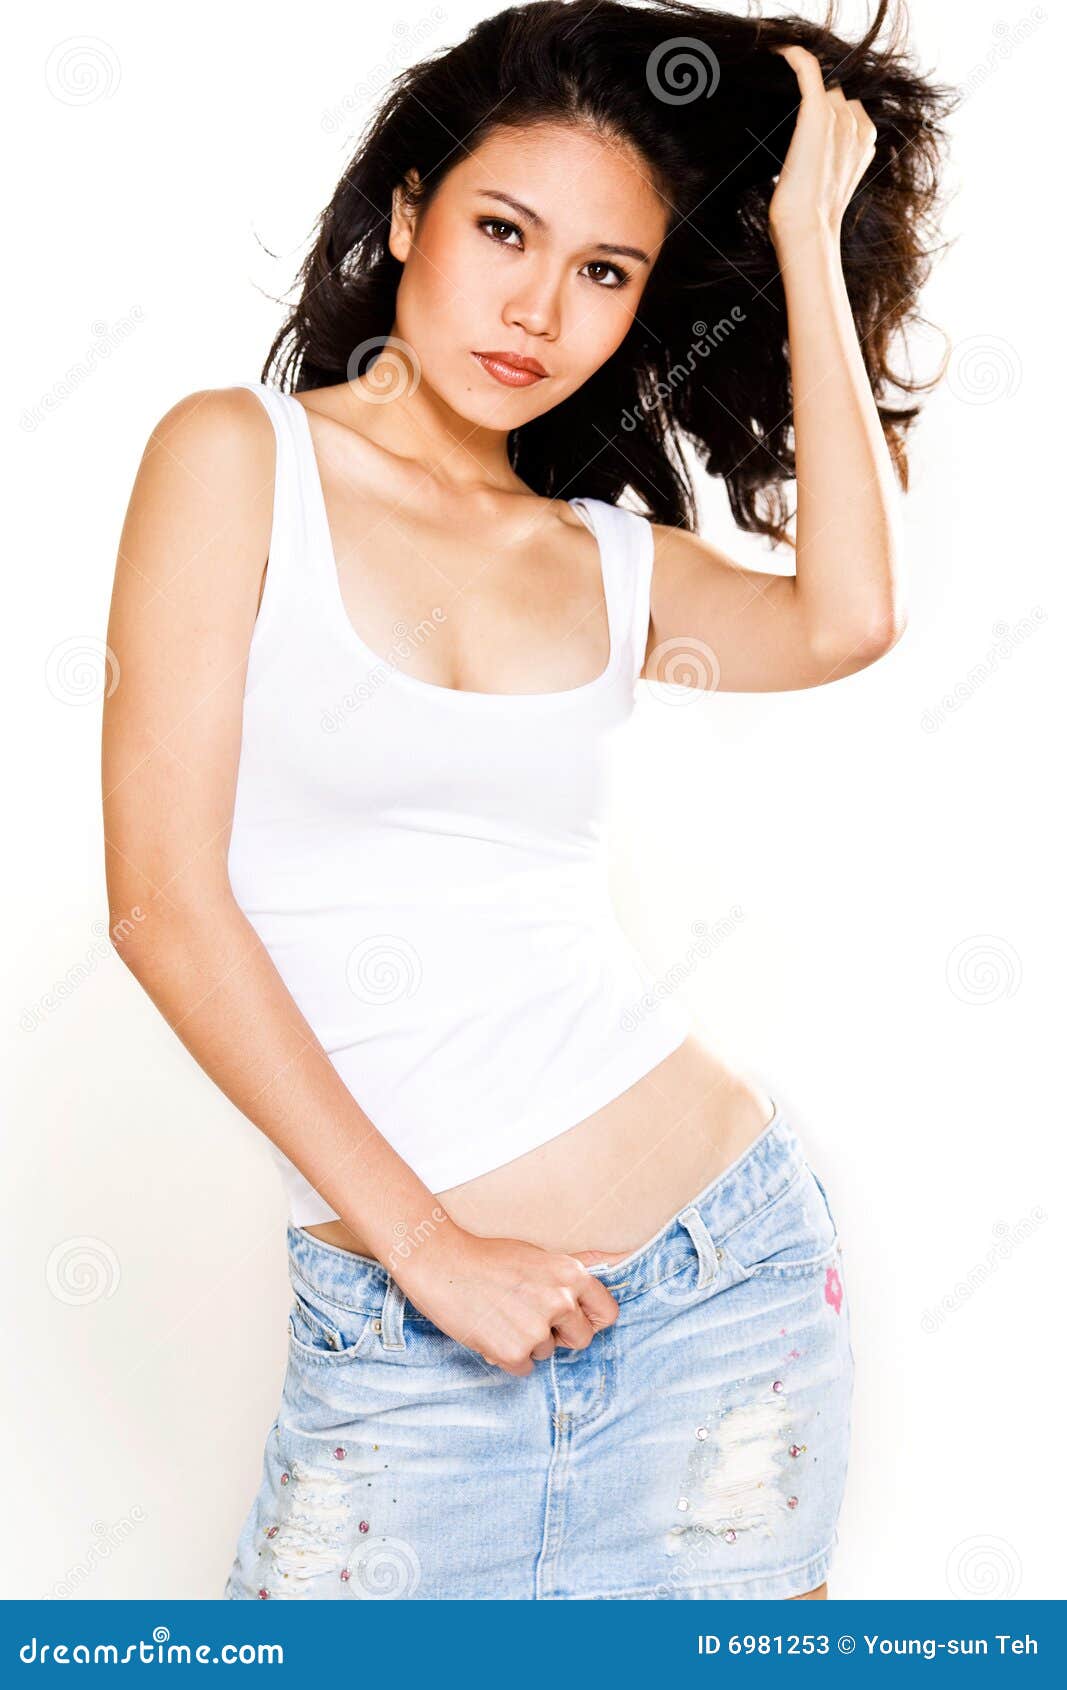 Beautiful Tanned Skin Asian Model Stock Image Image Of Female Beauty 6981253 